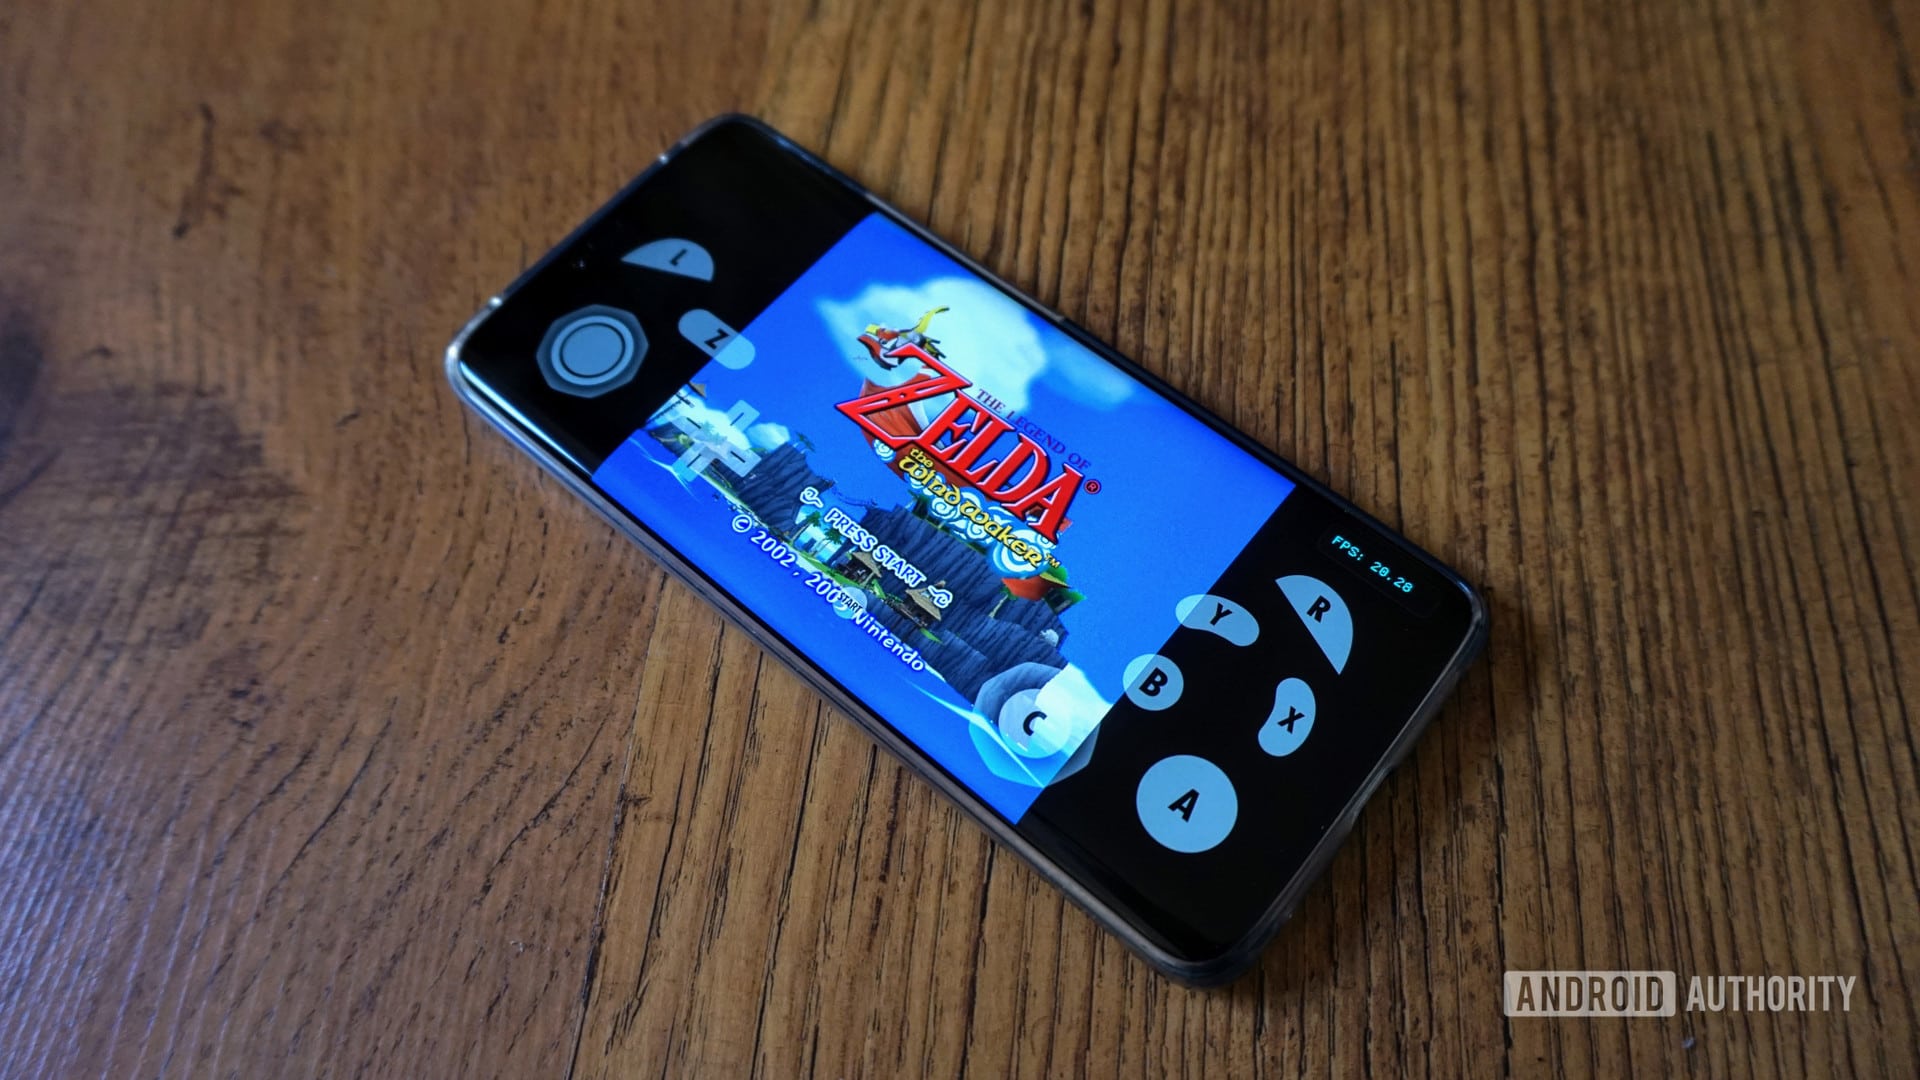 Sonic Rivals ROM - PSP Download - Emulator Games